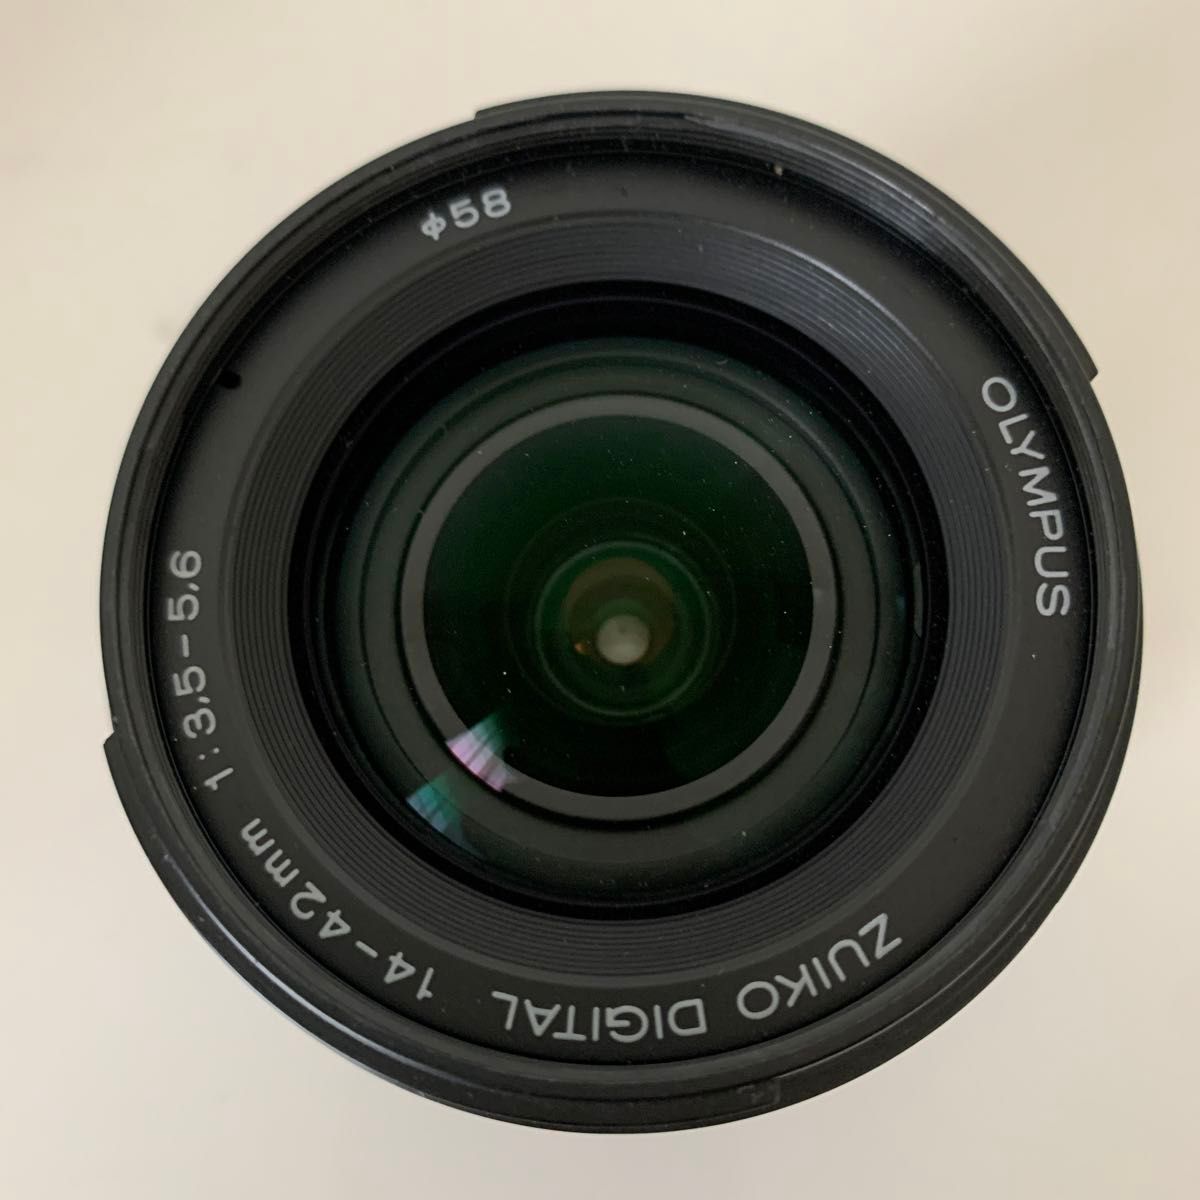 Olympus オリンパス デジタル一眼レフカメラ E-620 & Zuiko degital 14-42mm, 40-150mm